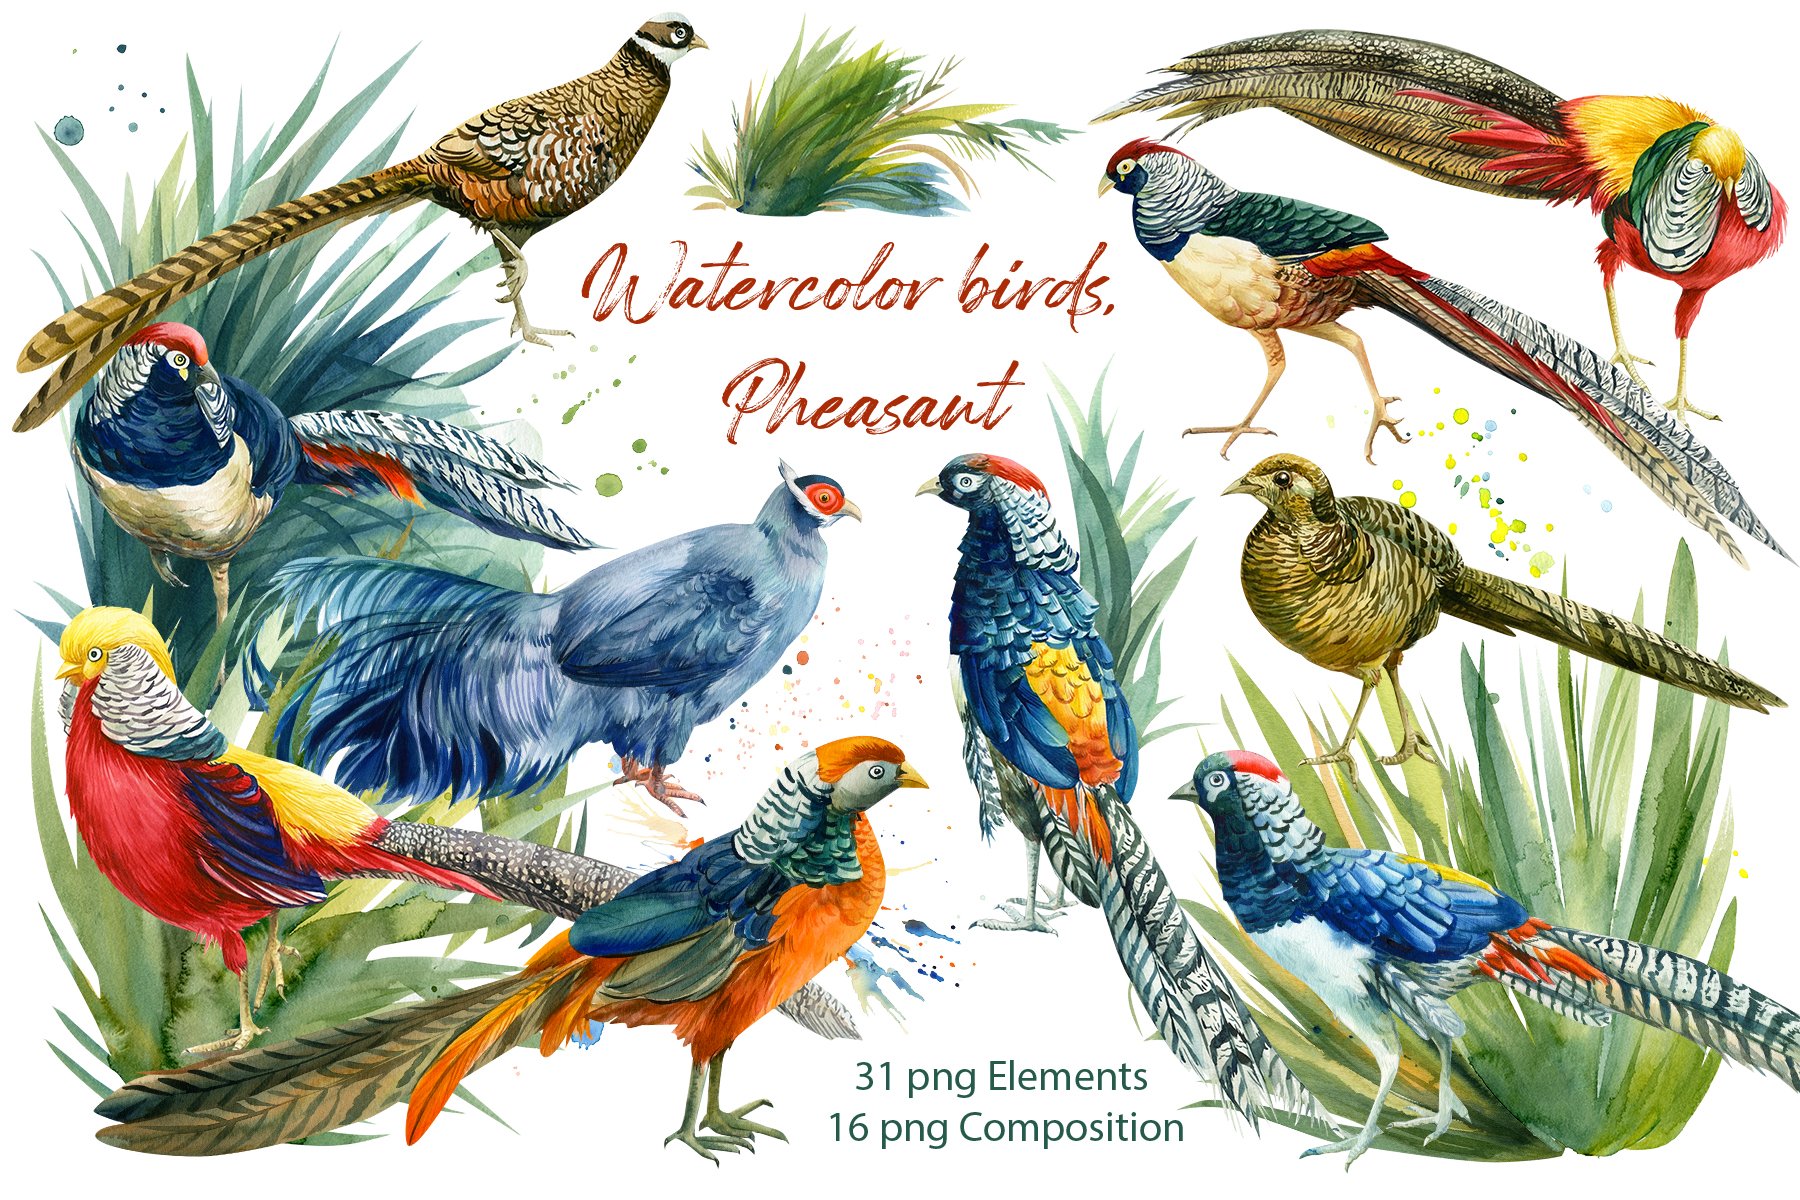 Watercolor birds, pheasant cover image.